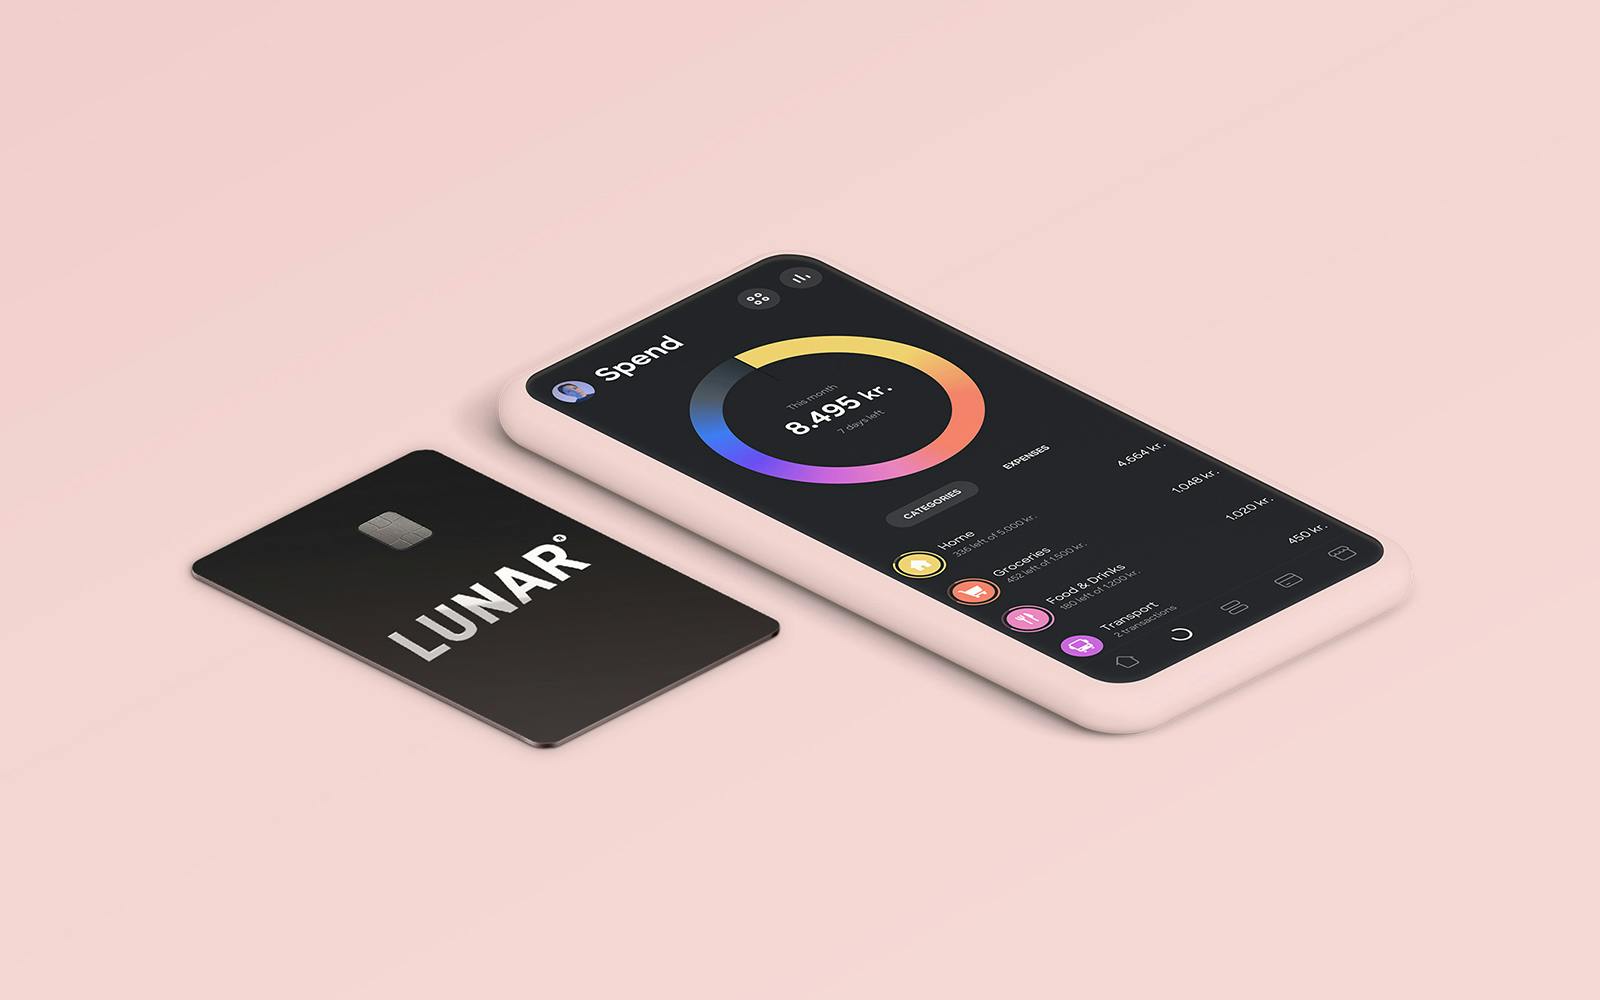 Lunar bank card and Lunar mobile app